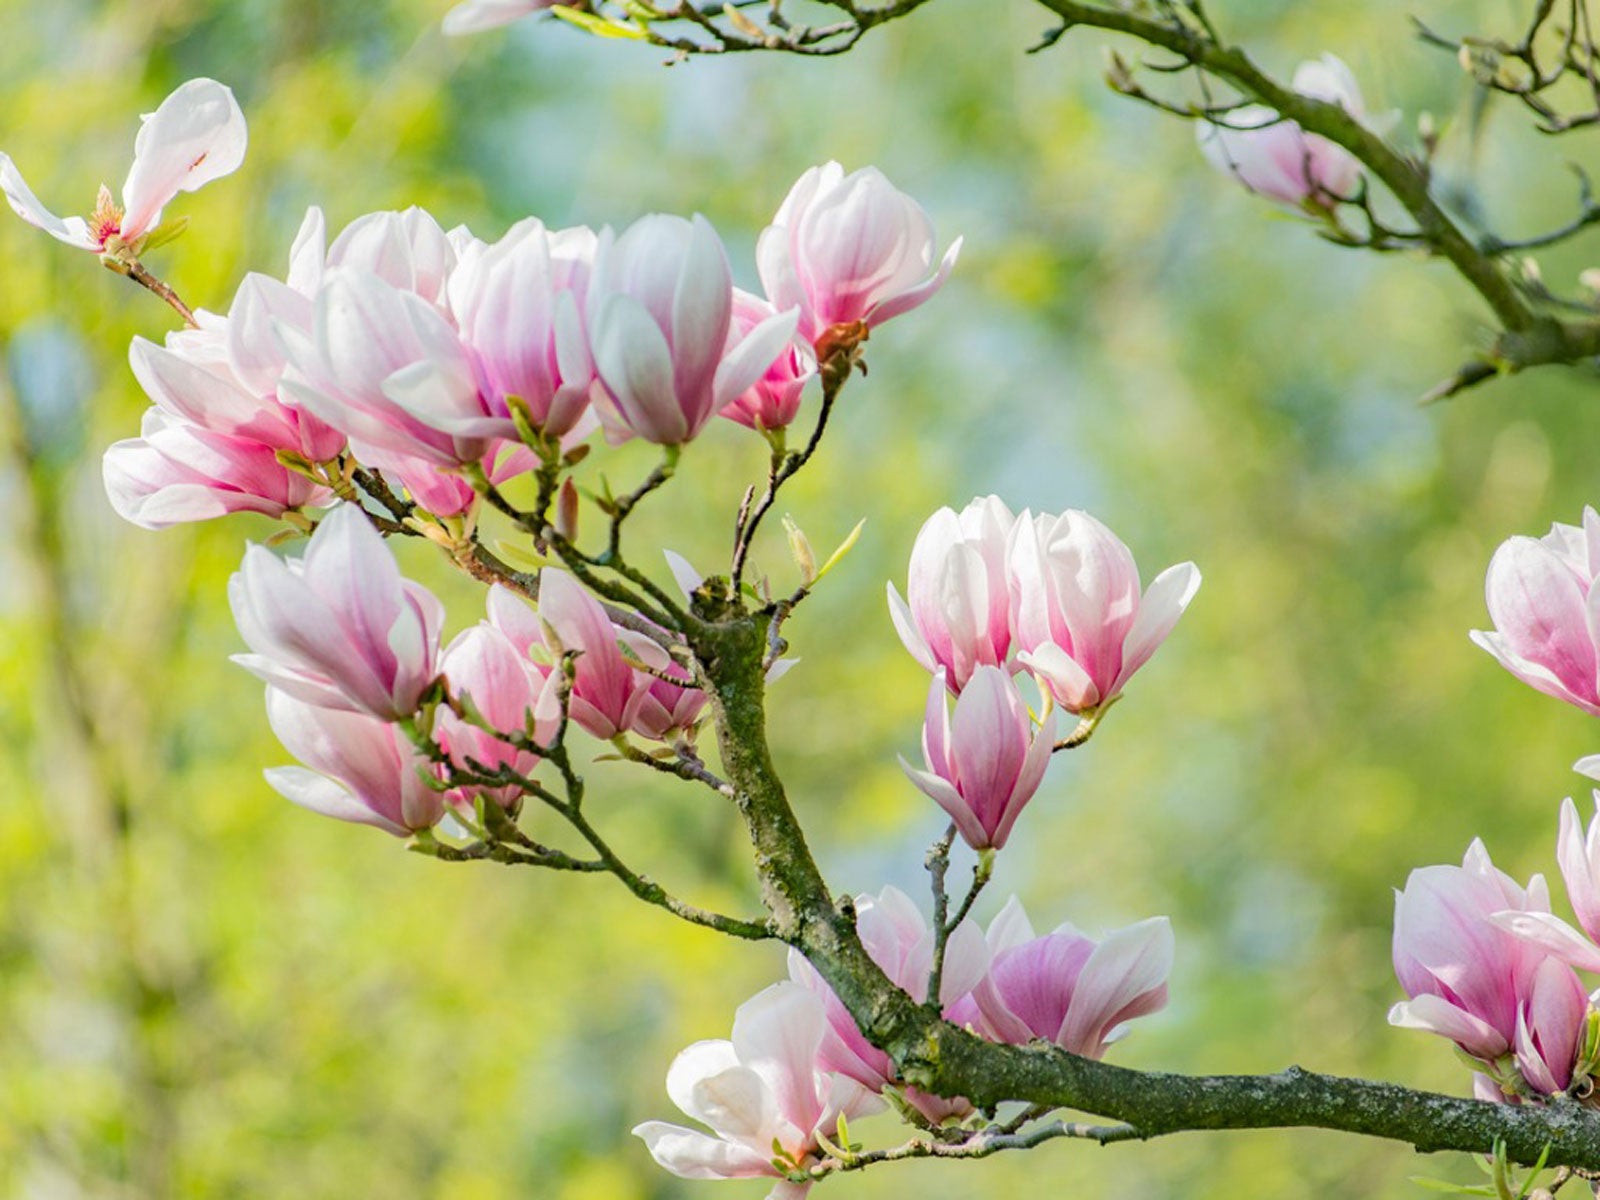 magnolia tree care - how to grow healthy magnolia trees